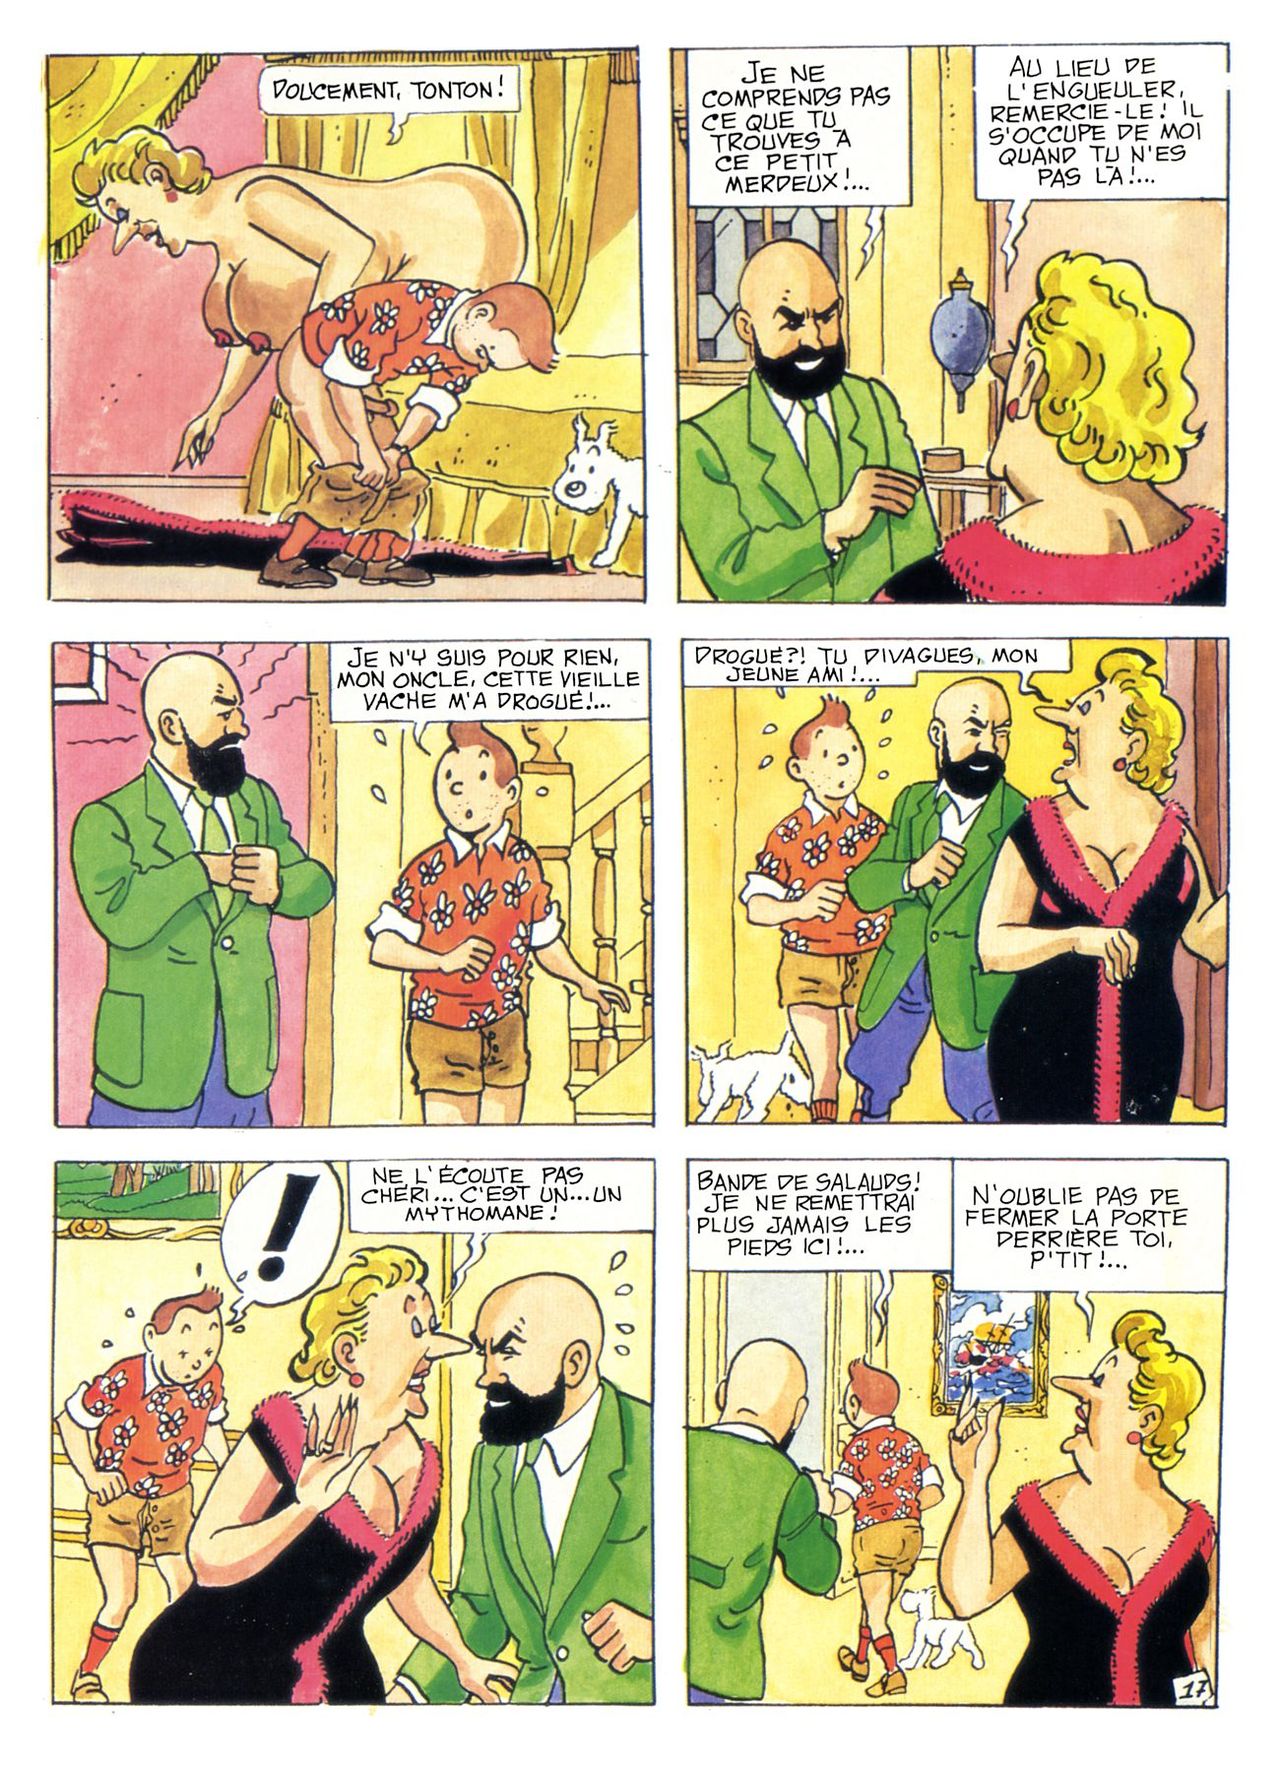 La Vie Sexuelle De Tintin numero d'image 20